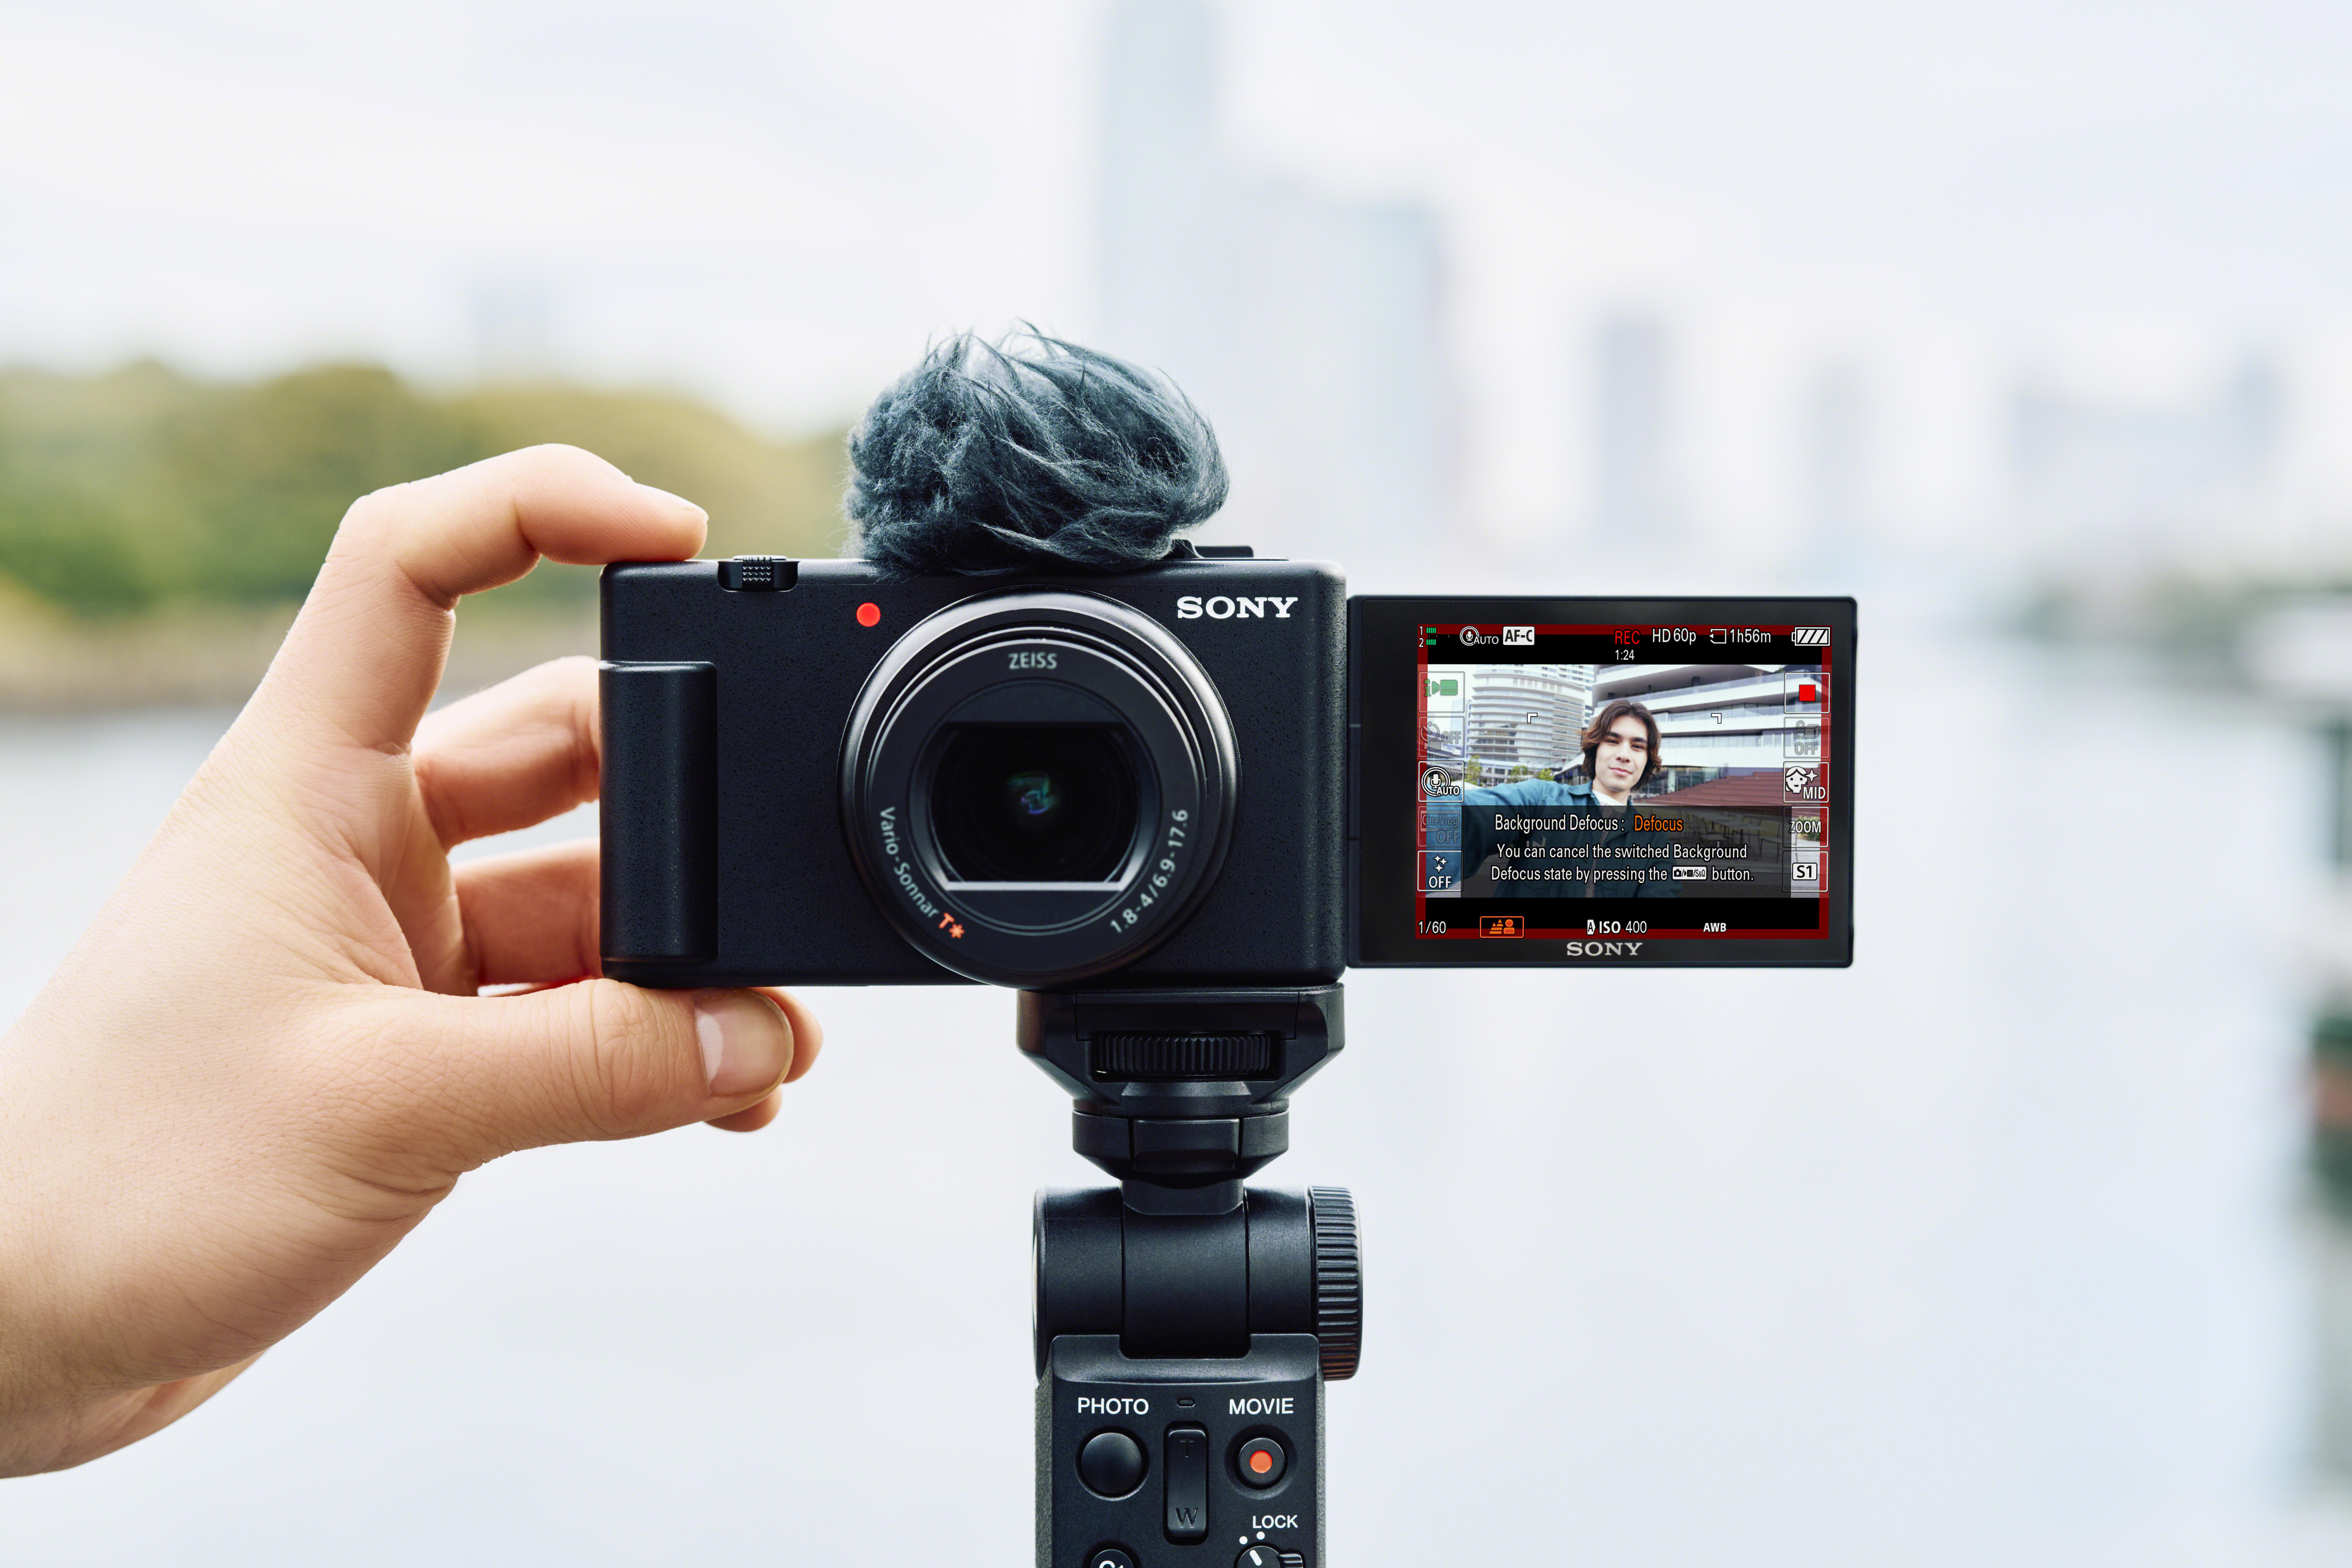 SONY ZV-1 II Vlog Digitalkamera WLAN Fine opt. Xtra 2.7x Schwarz, Selfie-Touchdisplay, Zoom